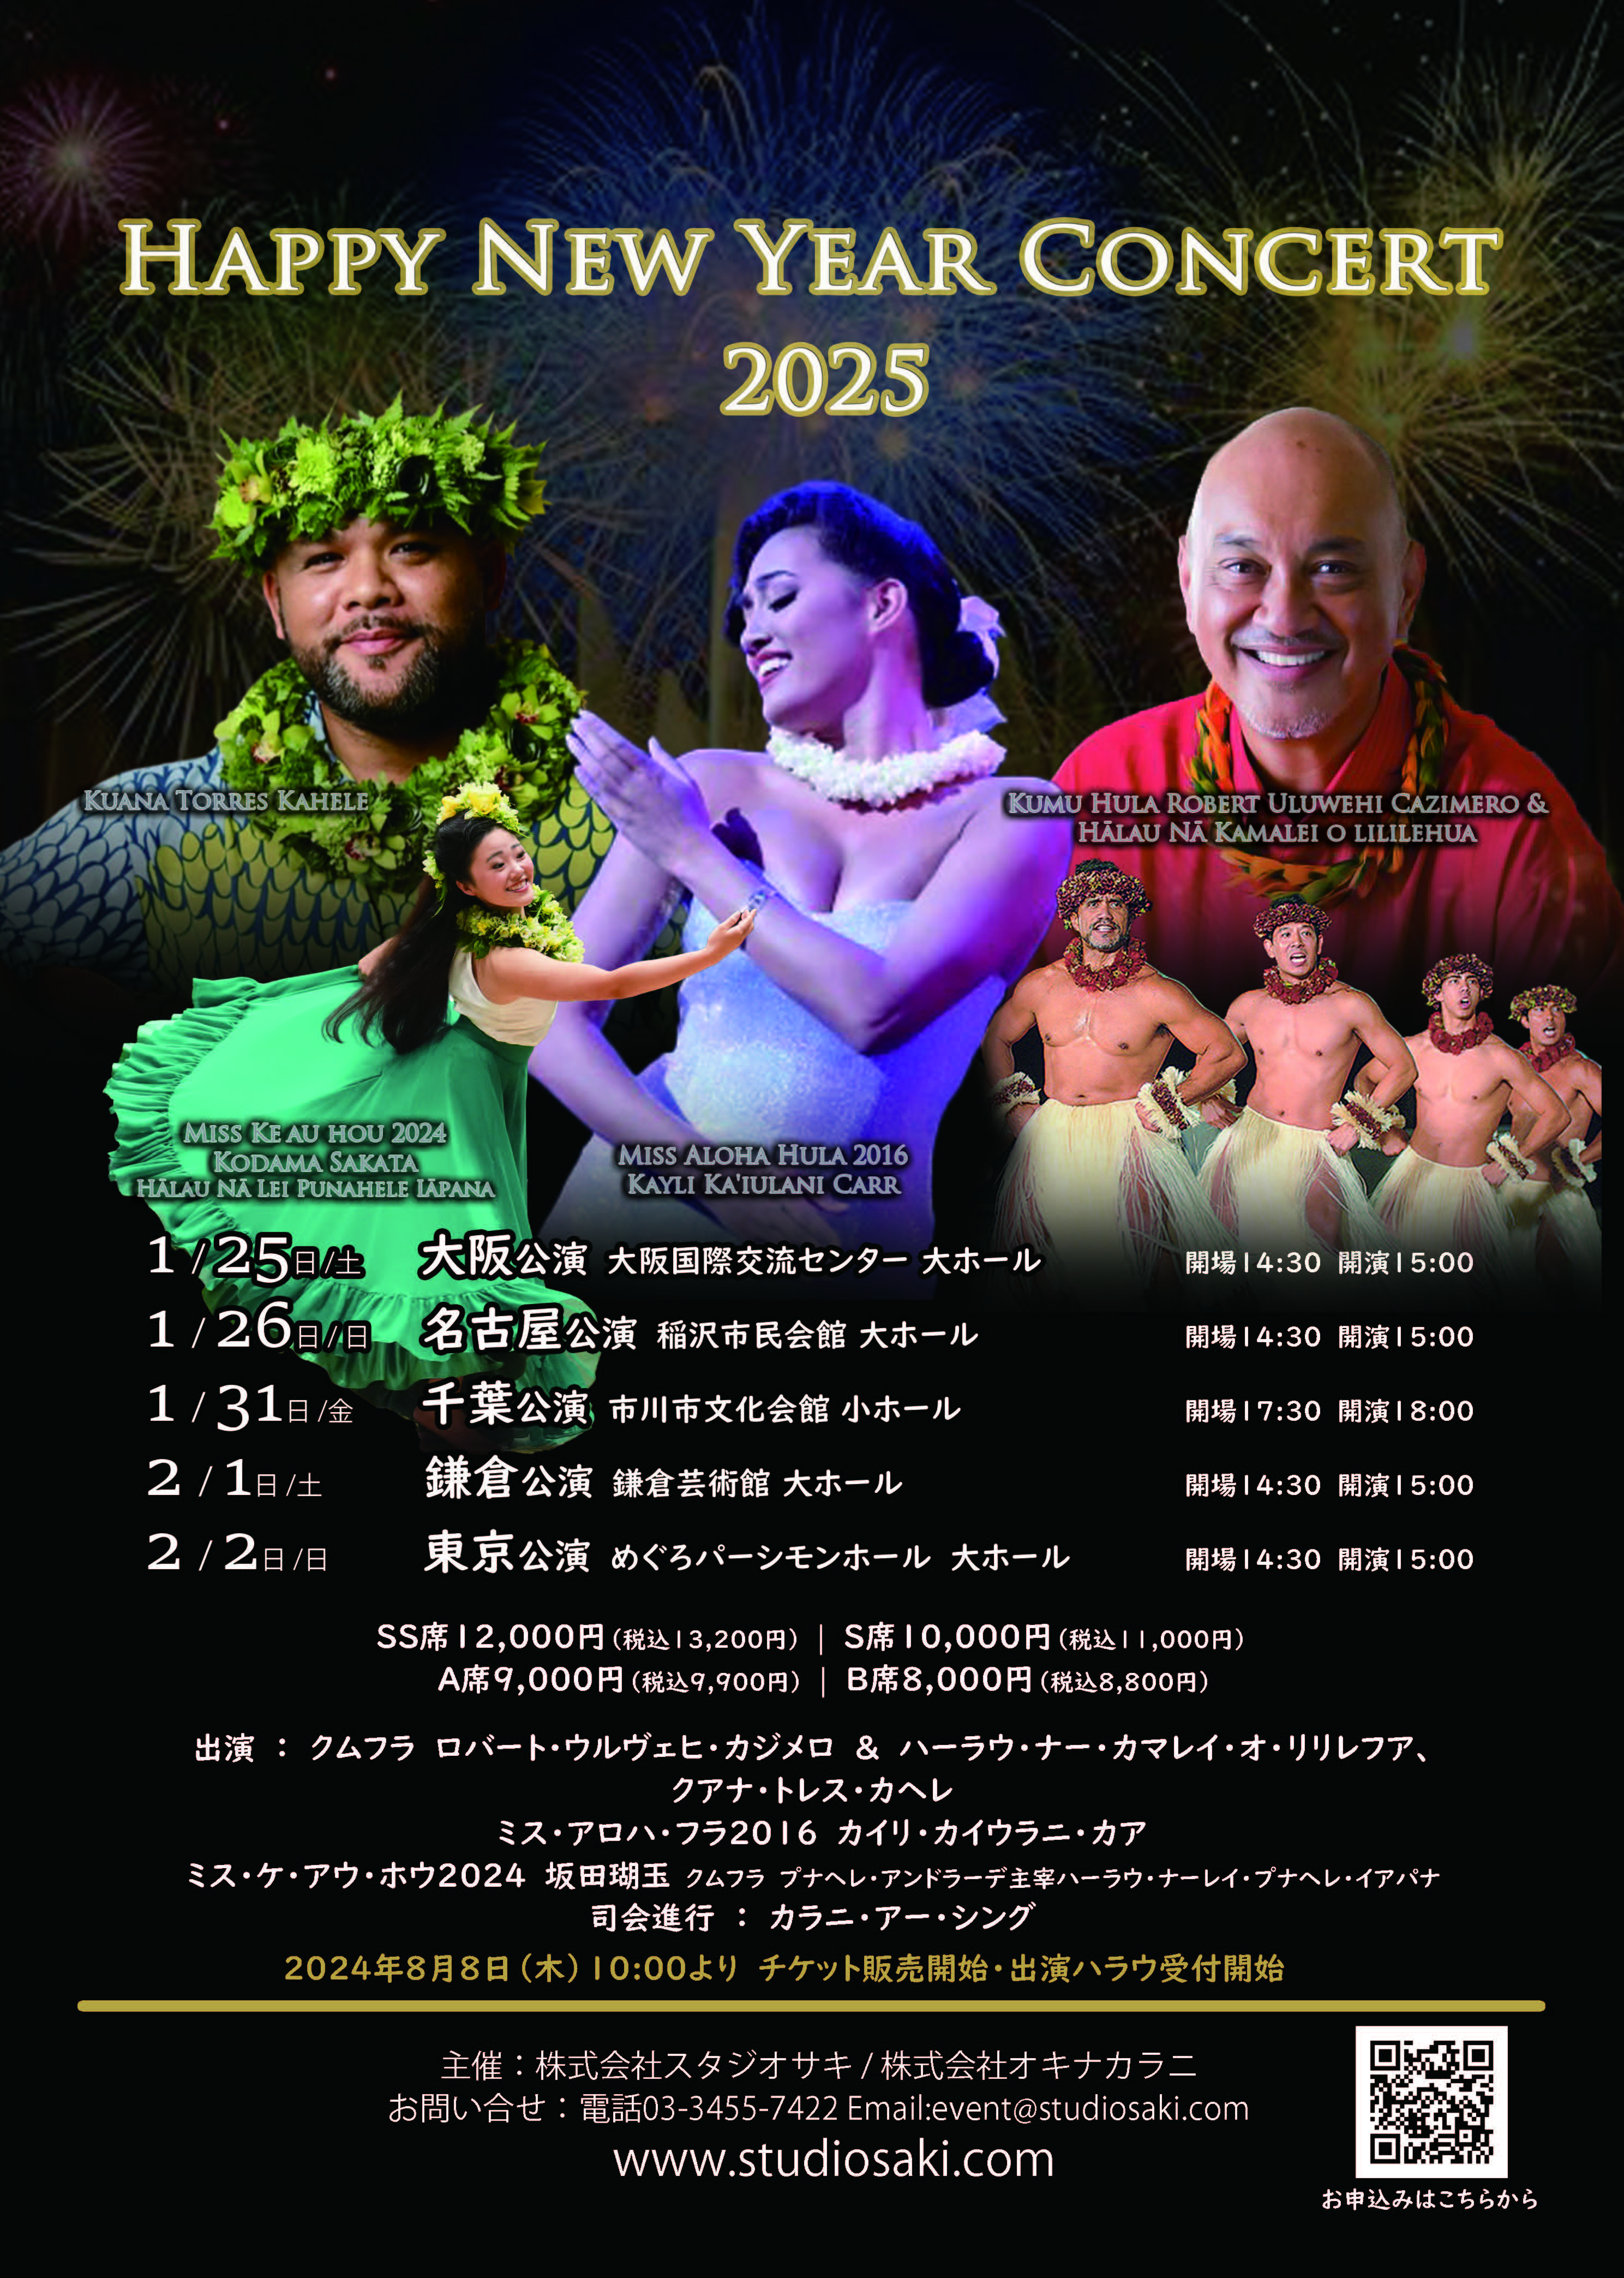 Happy New Year Concert 2025